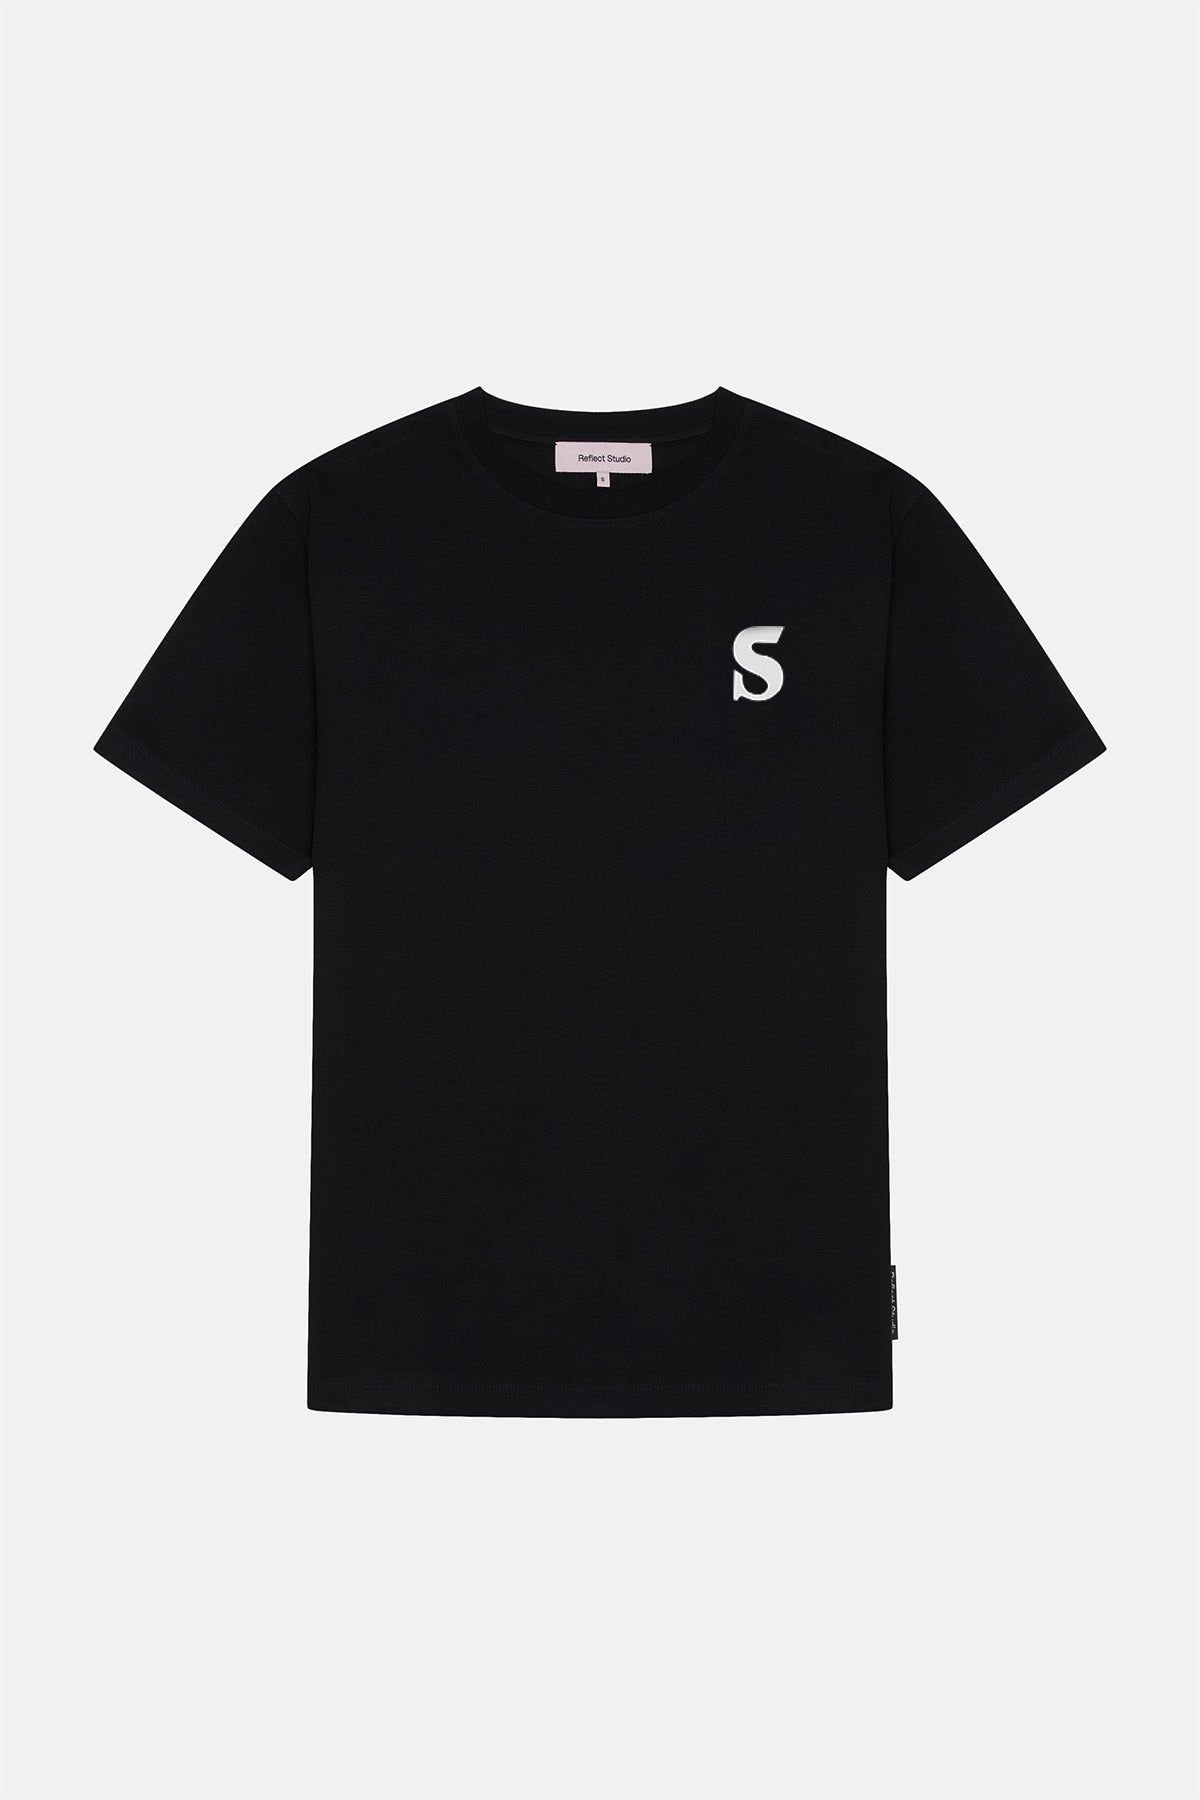 Socrates Logo Premium T-Shirt - Siyah